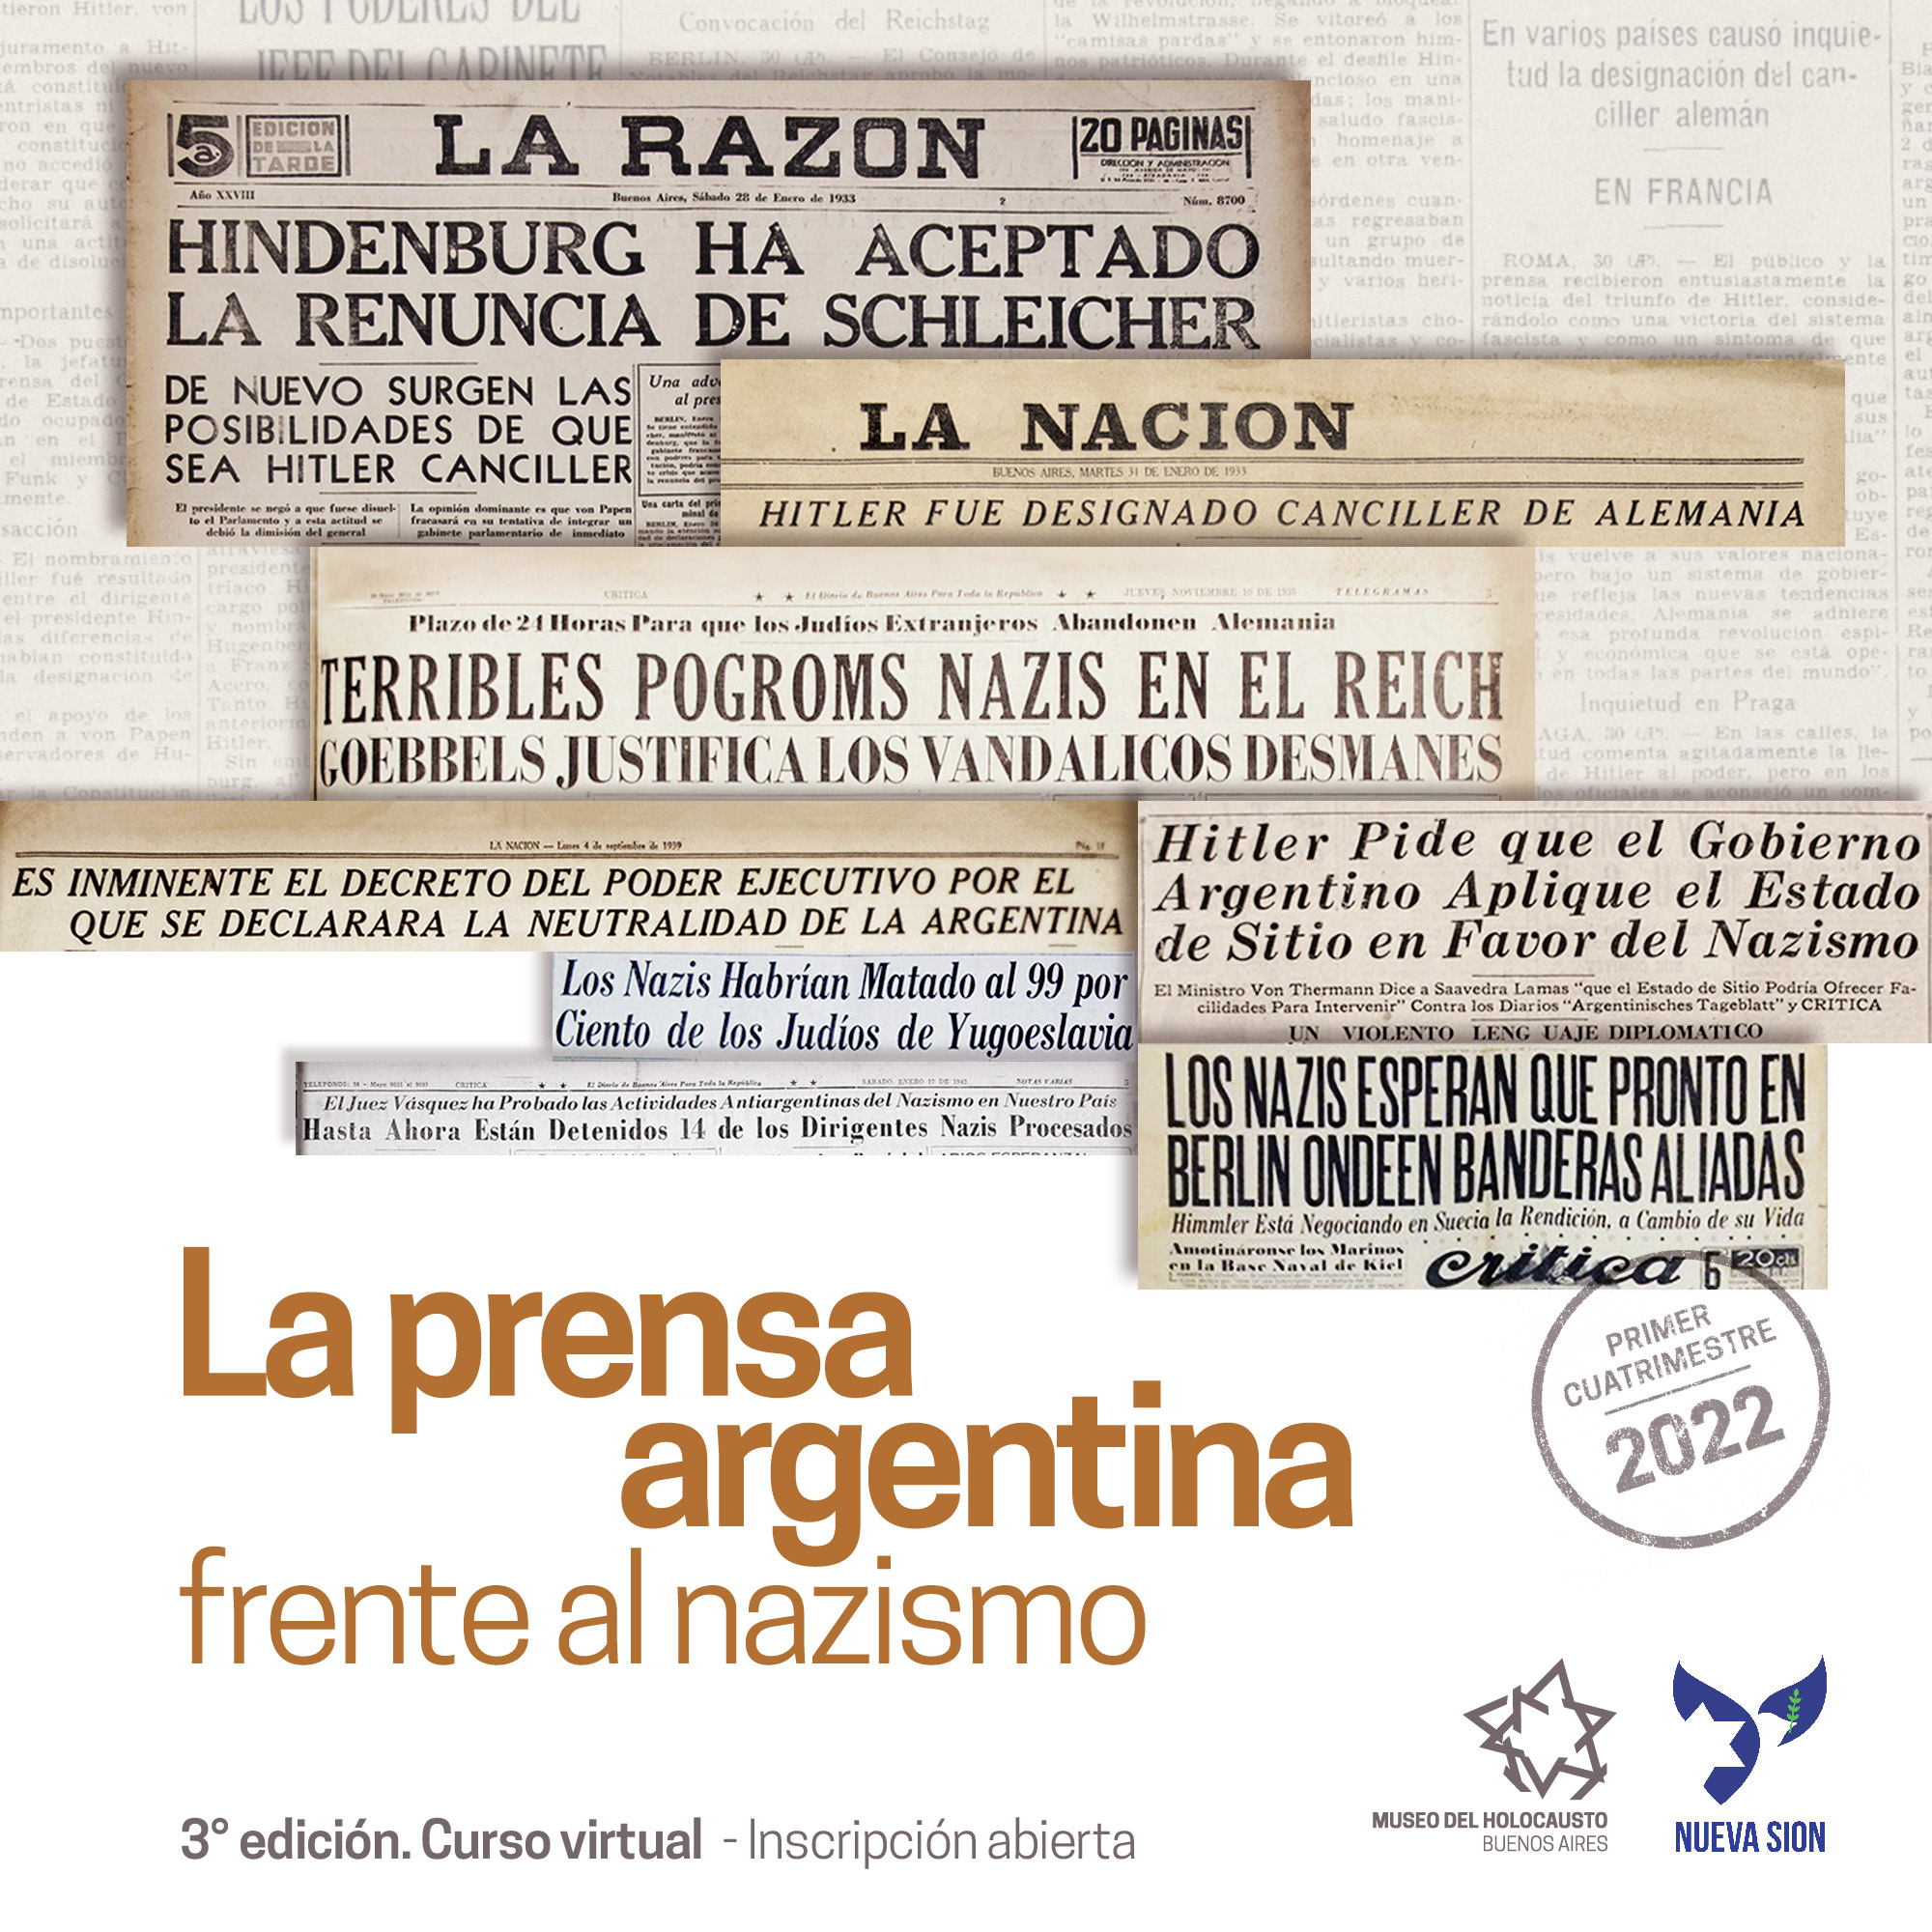 Prensa Argentina frente al nazismo